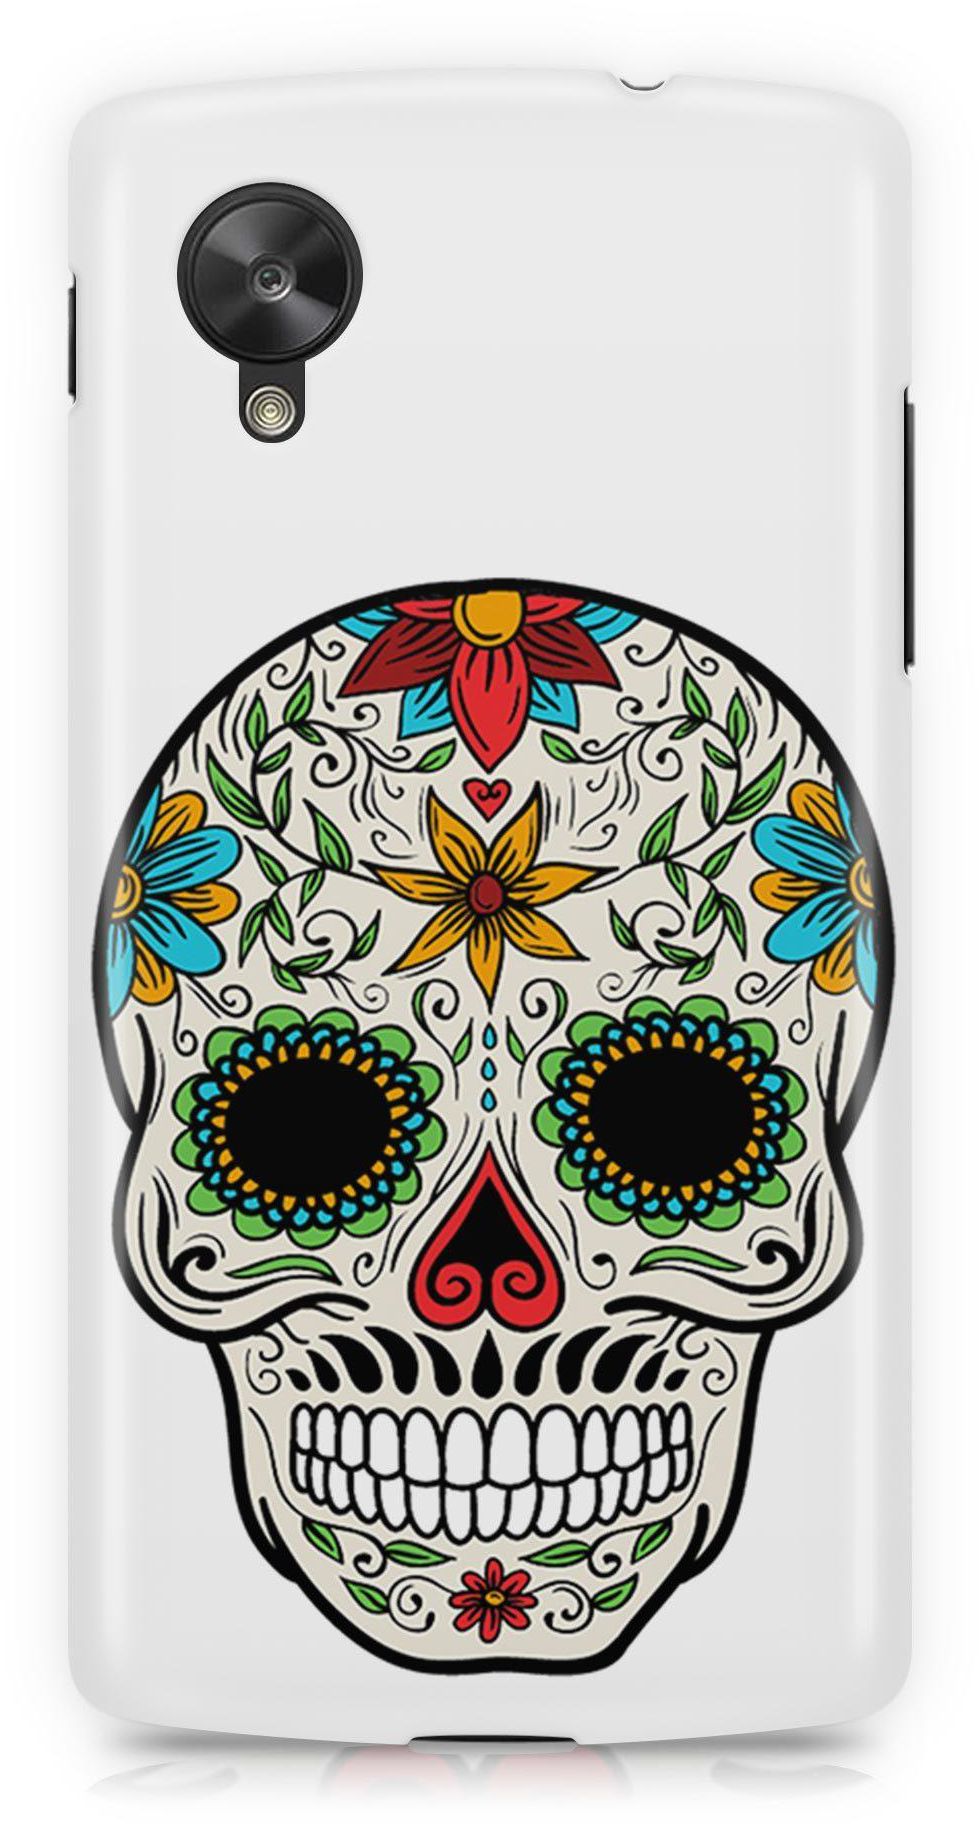 The Skull of Flowers Rock Music Tattoo Phone Case for Nexus 5